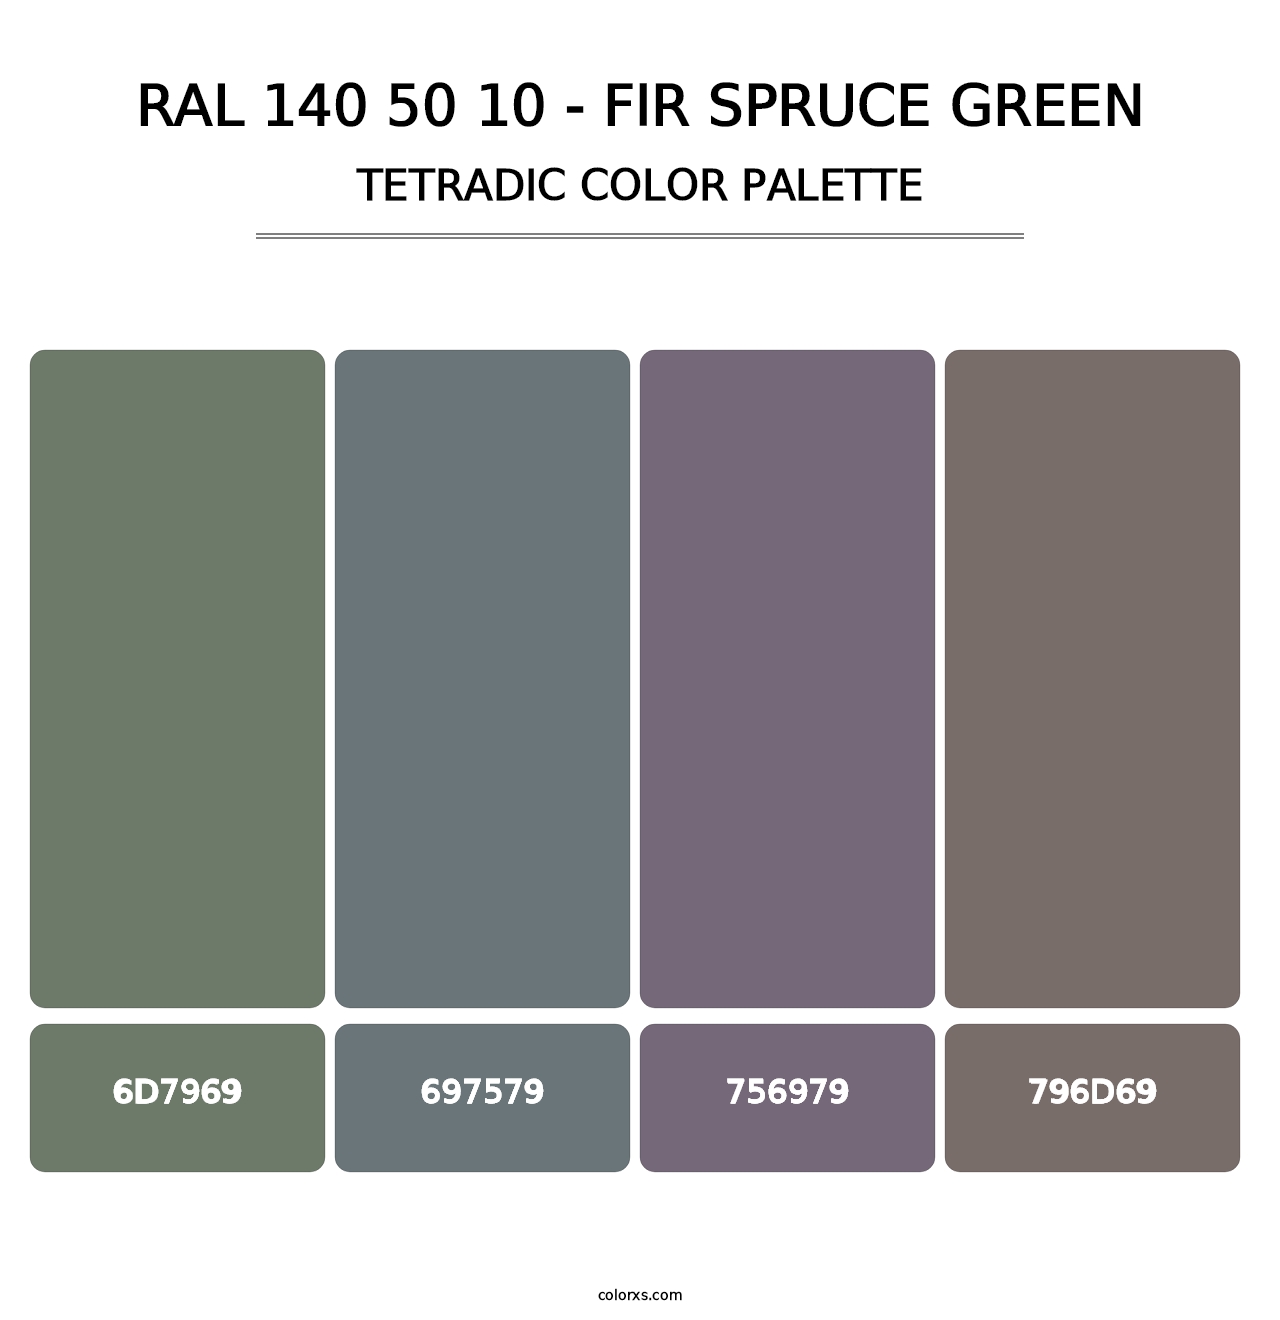 RAL 140 50 10 - Fir Spruce Green - Tetradic Color Palette